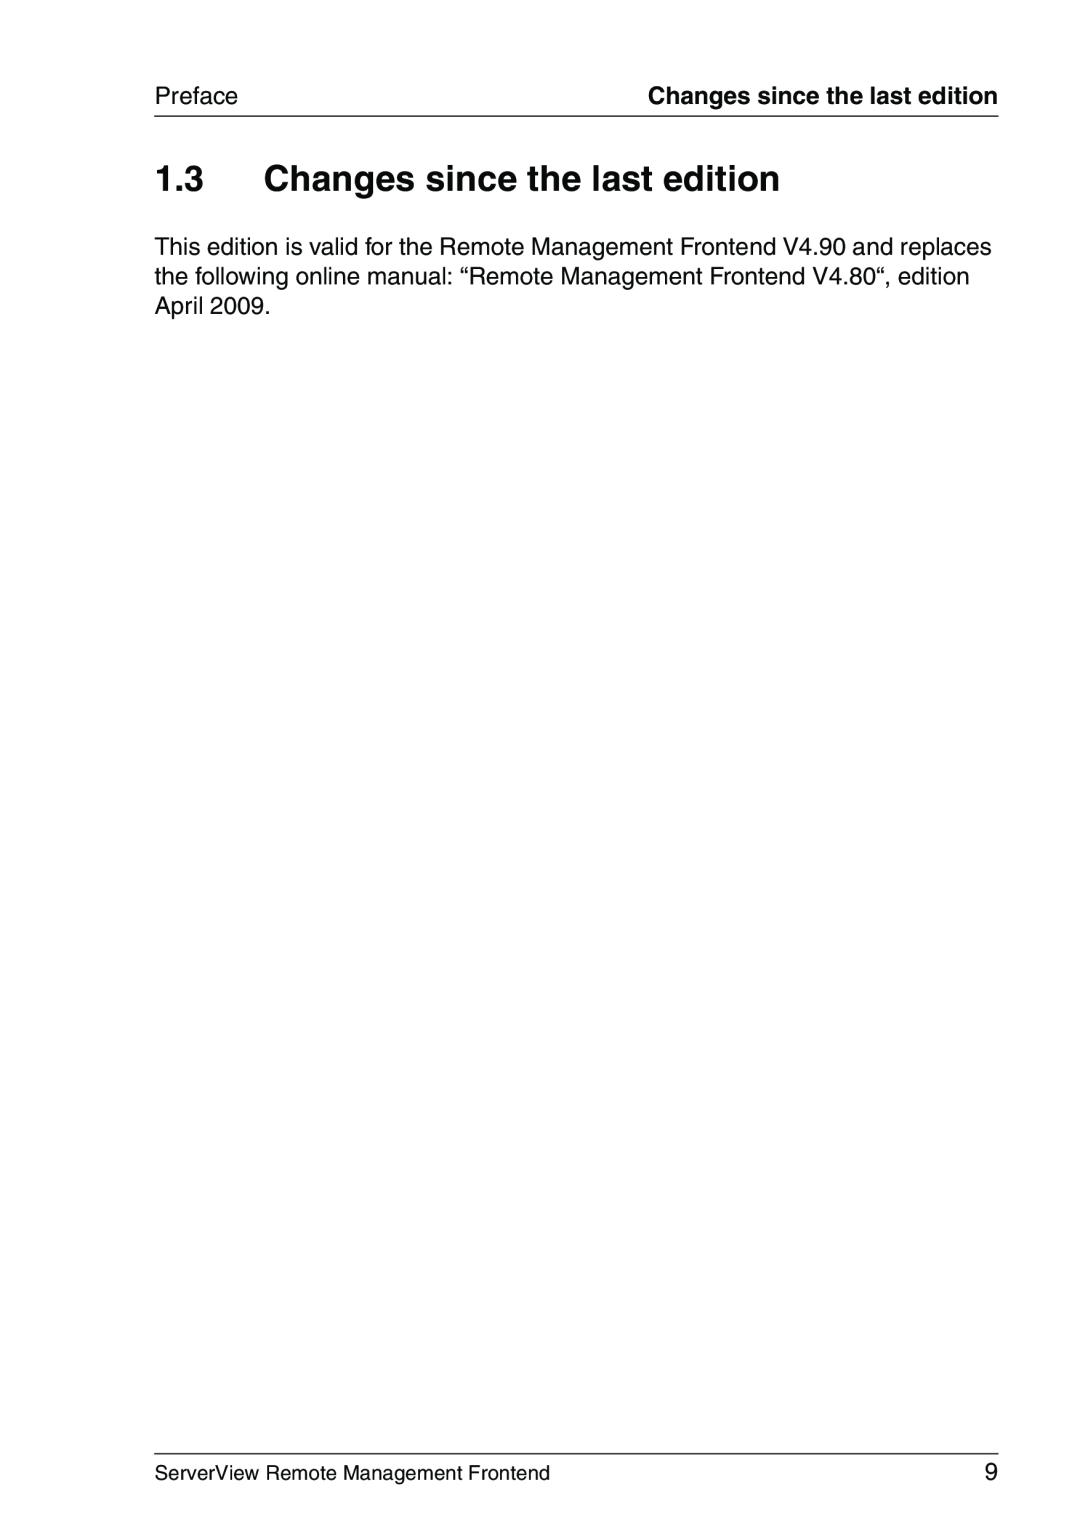 Fujitsu V4.90 manual Changes since the last edition, Preface, ServerView Remote Management Frontend 